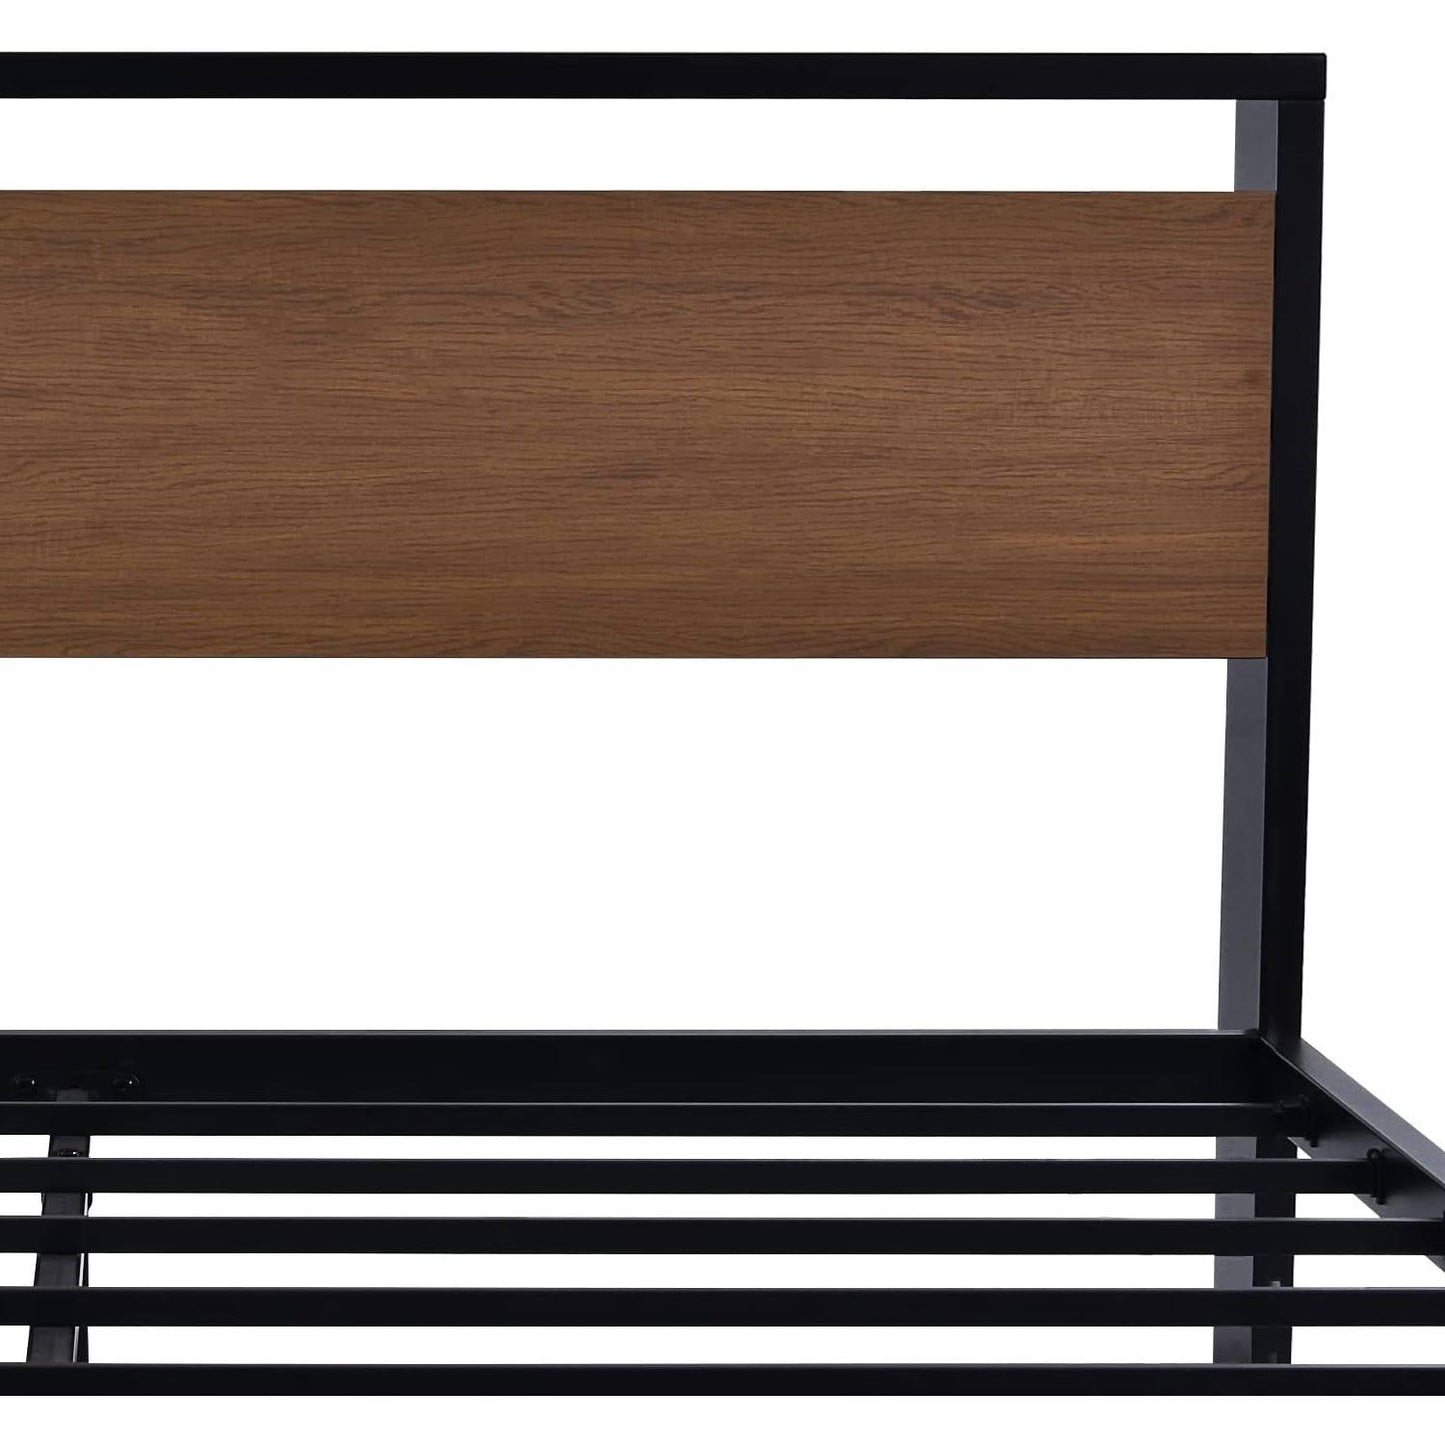 Bedroom > Bed Frames > Platform Beds - Queen Metal Platform Bed With Walnut Finish Wood Panel Headboard Footboard